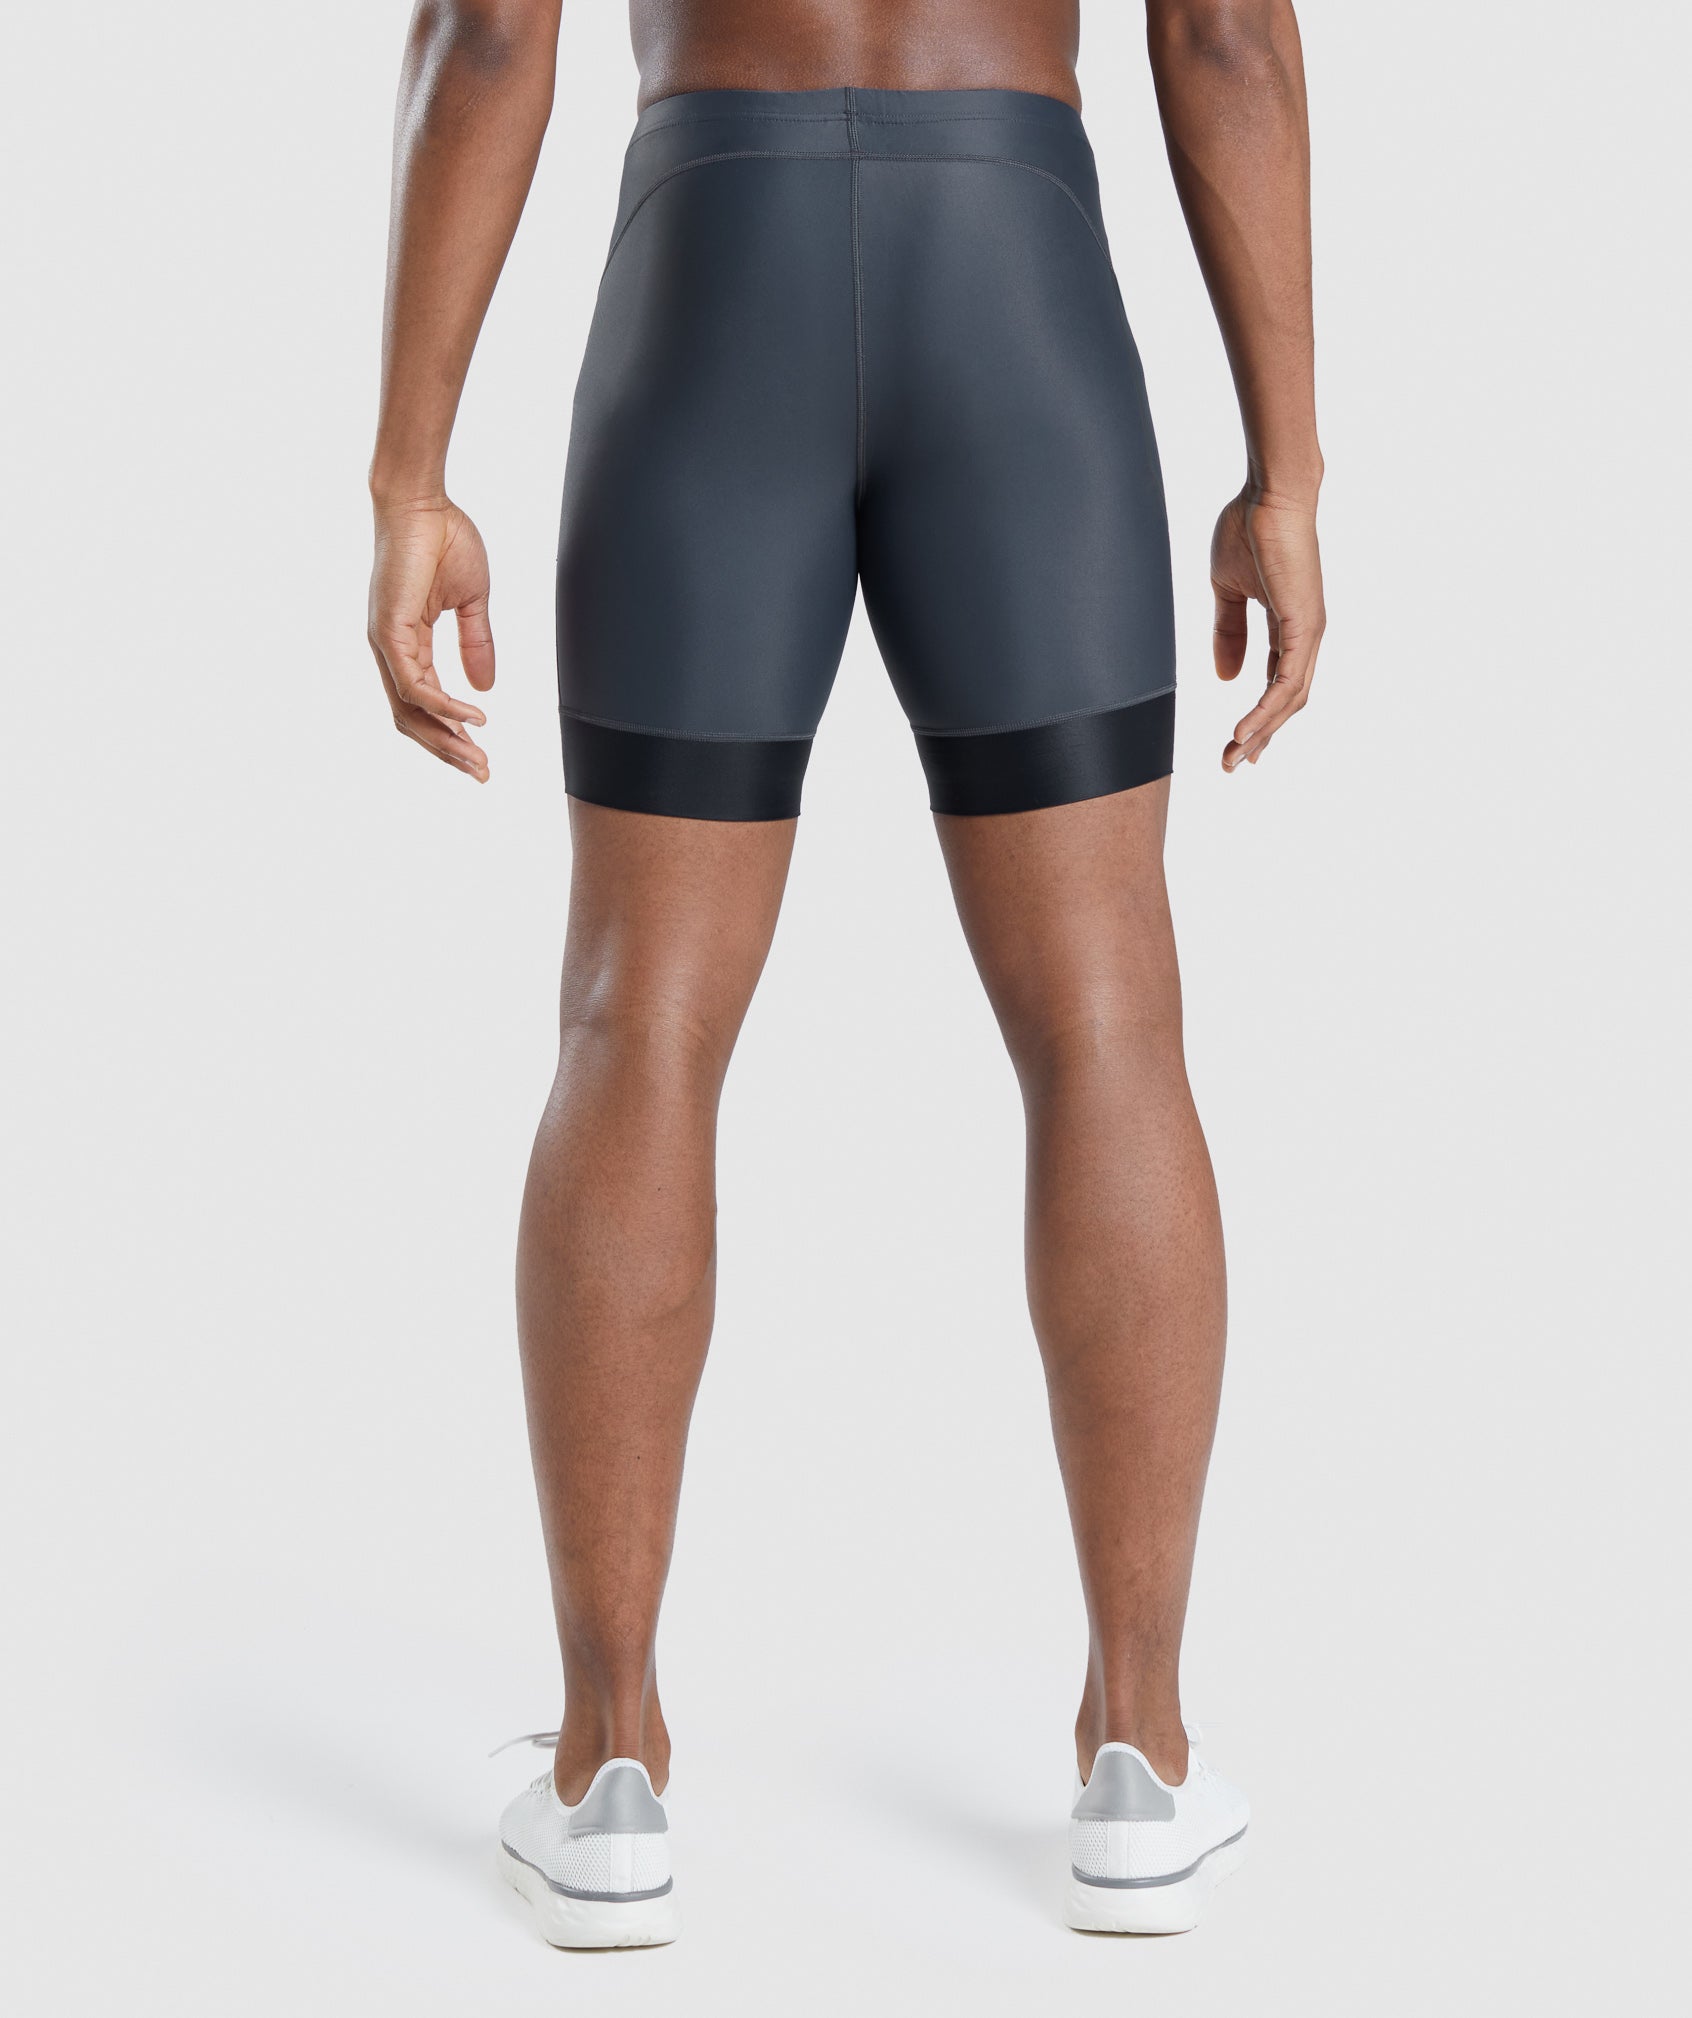 Apex Multi Shorts in Onyx Grey/Black